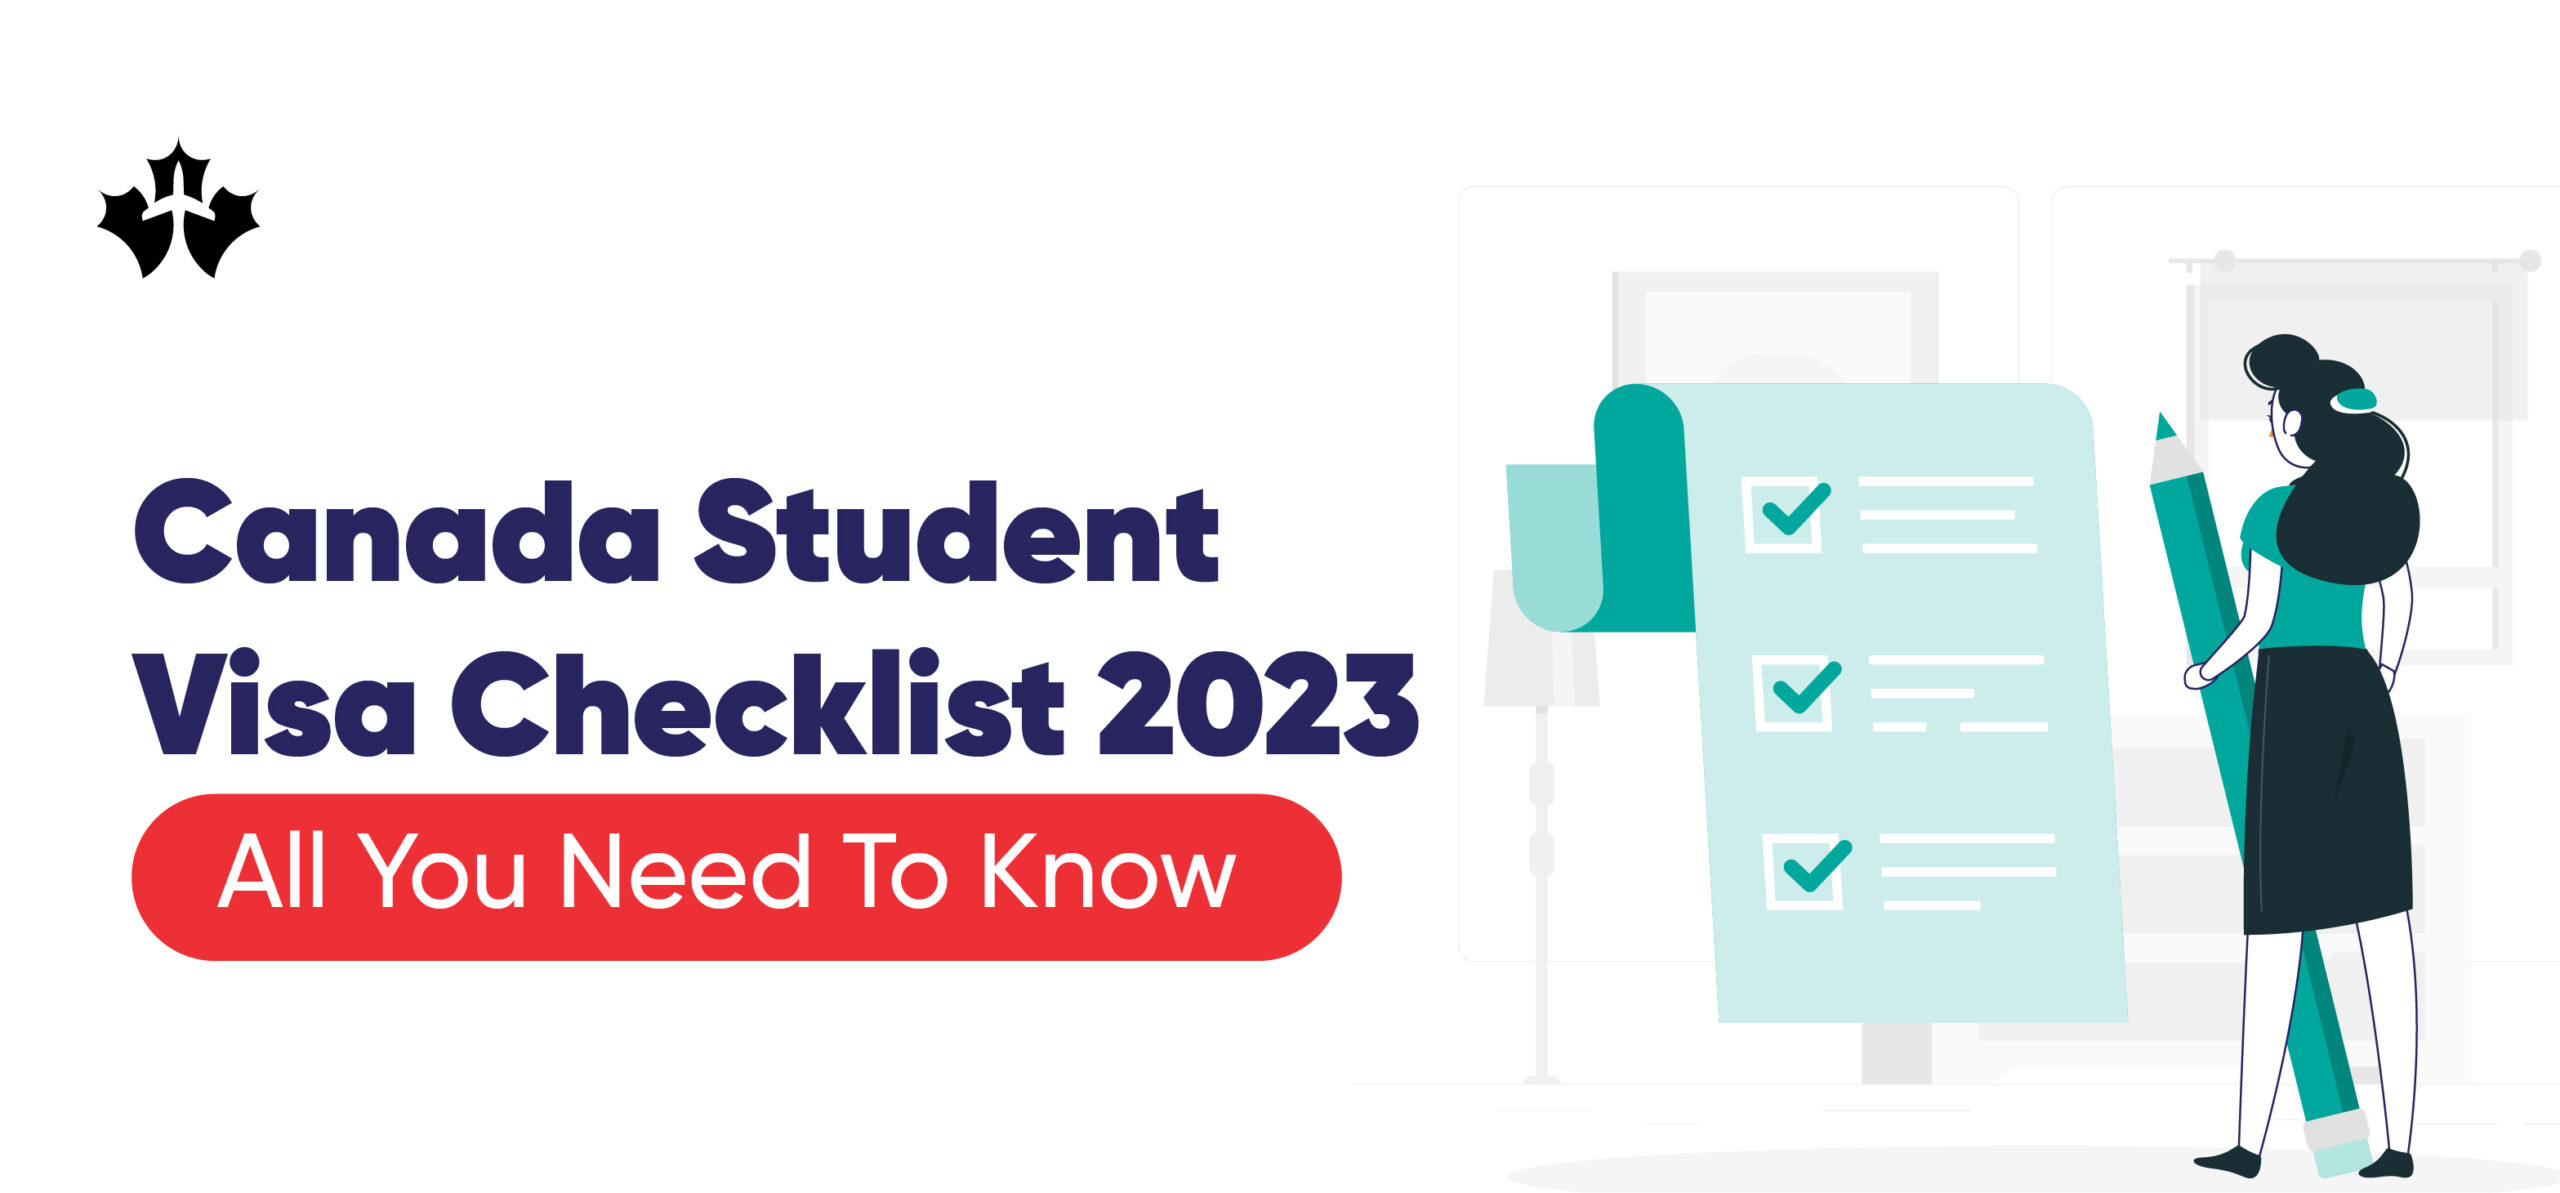 Simple checklist for Study visa Canada 2023